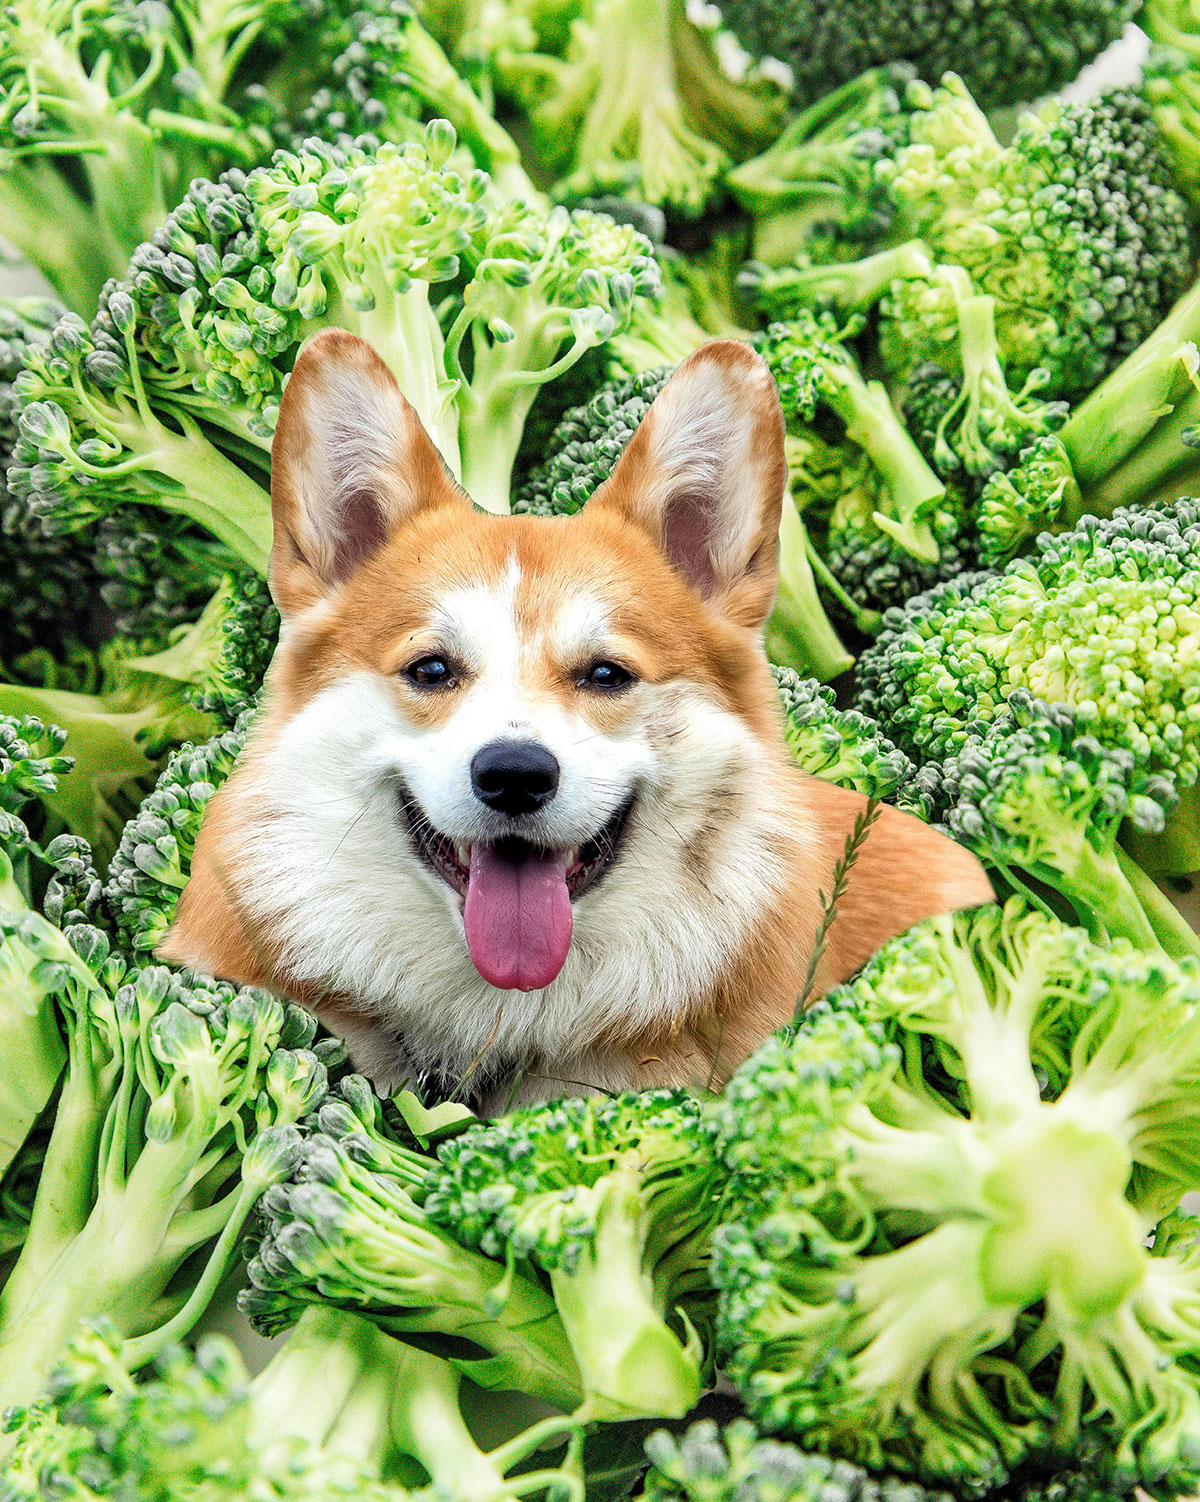 Corgi in a pile of broccoli